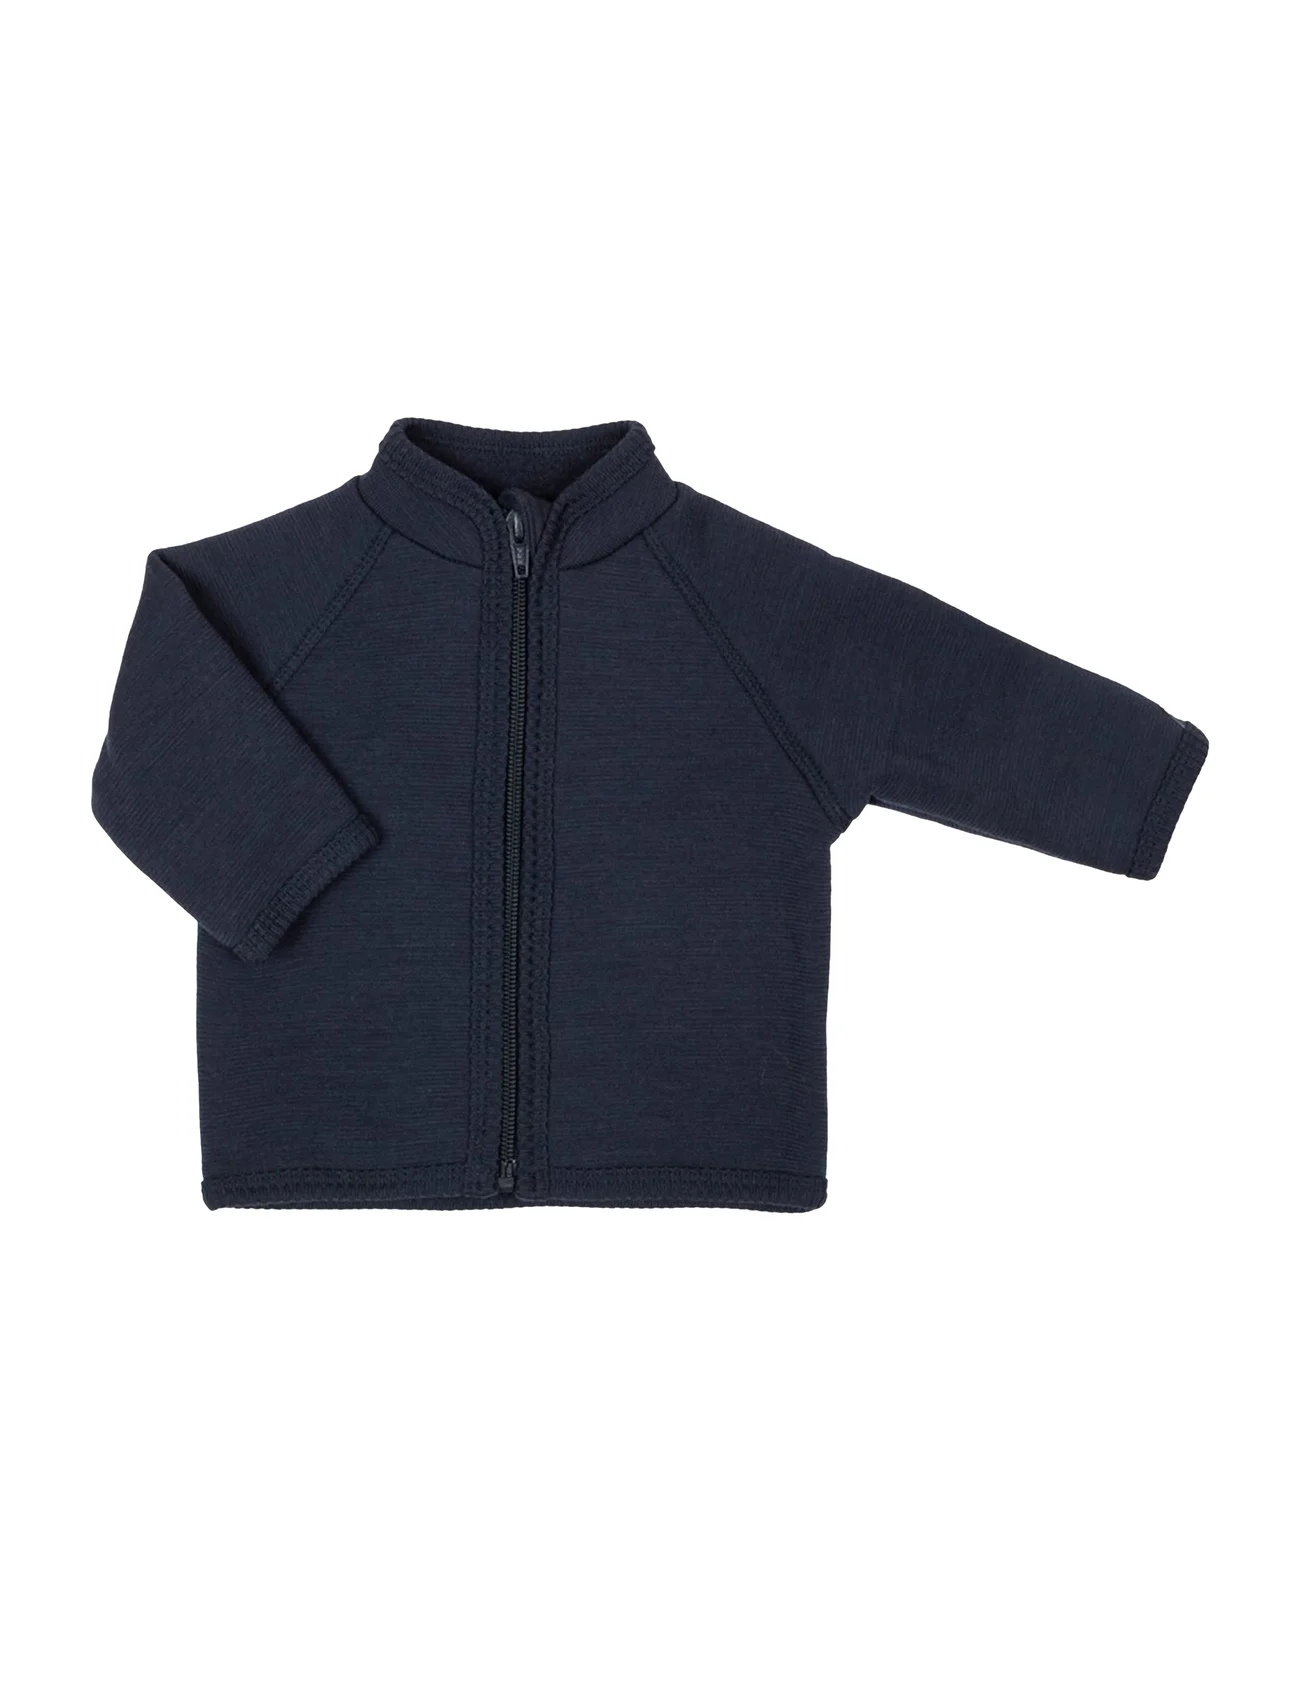 Smallstuff - Cardigan, merino wool w. zipper, navy - fleece jacket - navy - 0